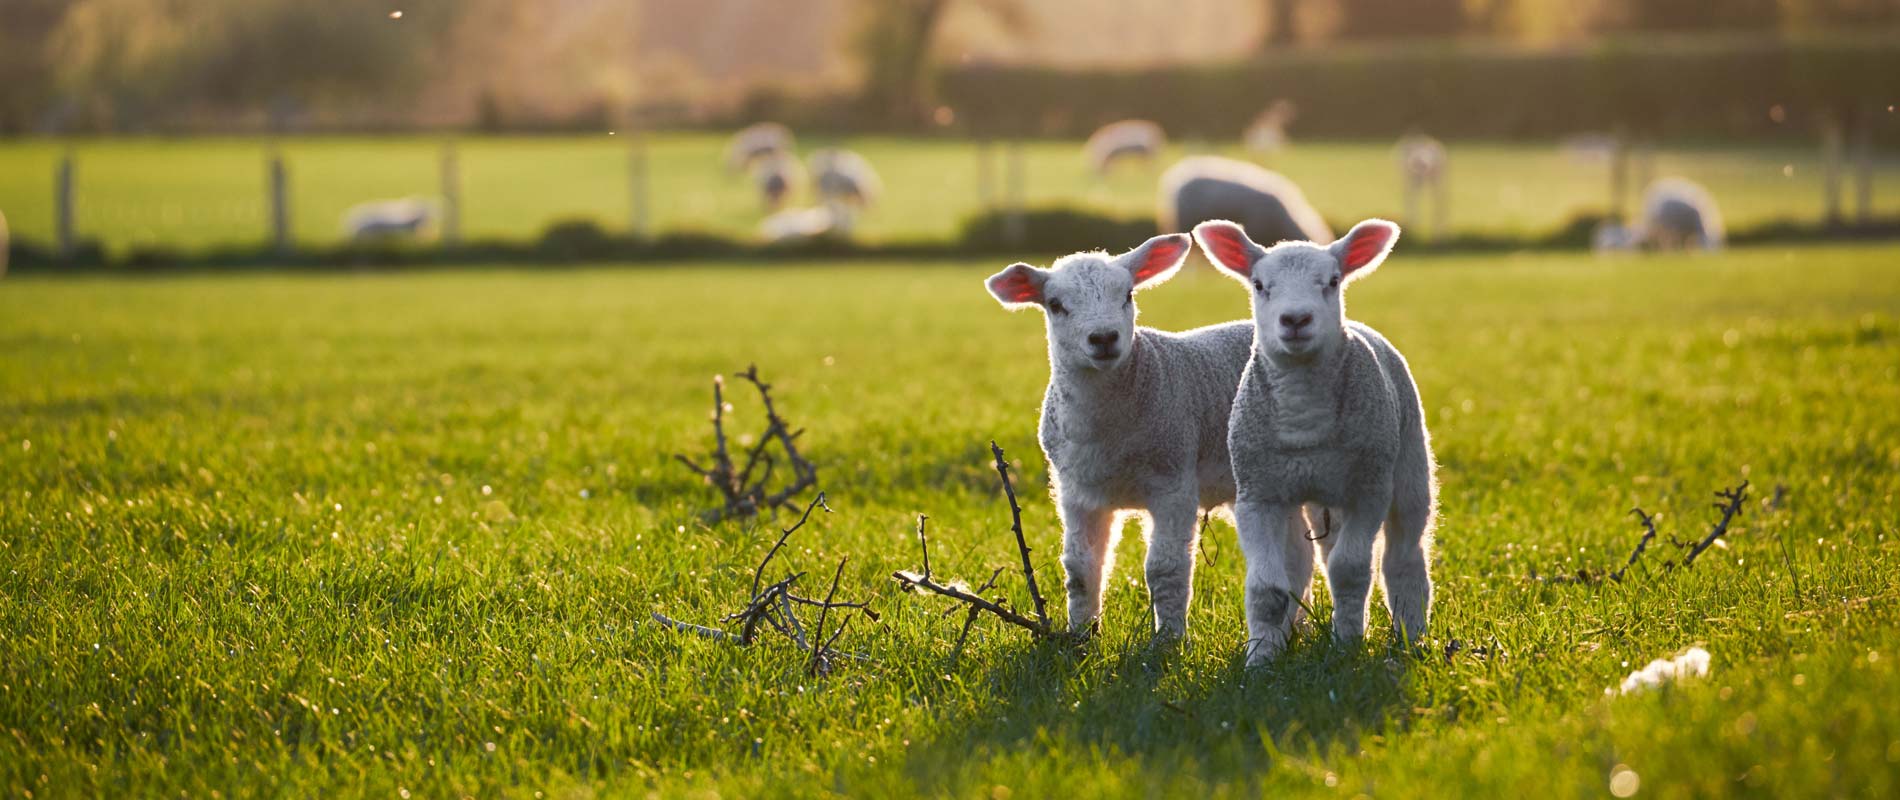 Two little lambs standing side by side in a grassy field